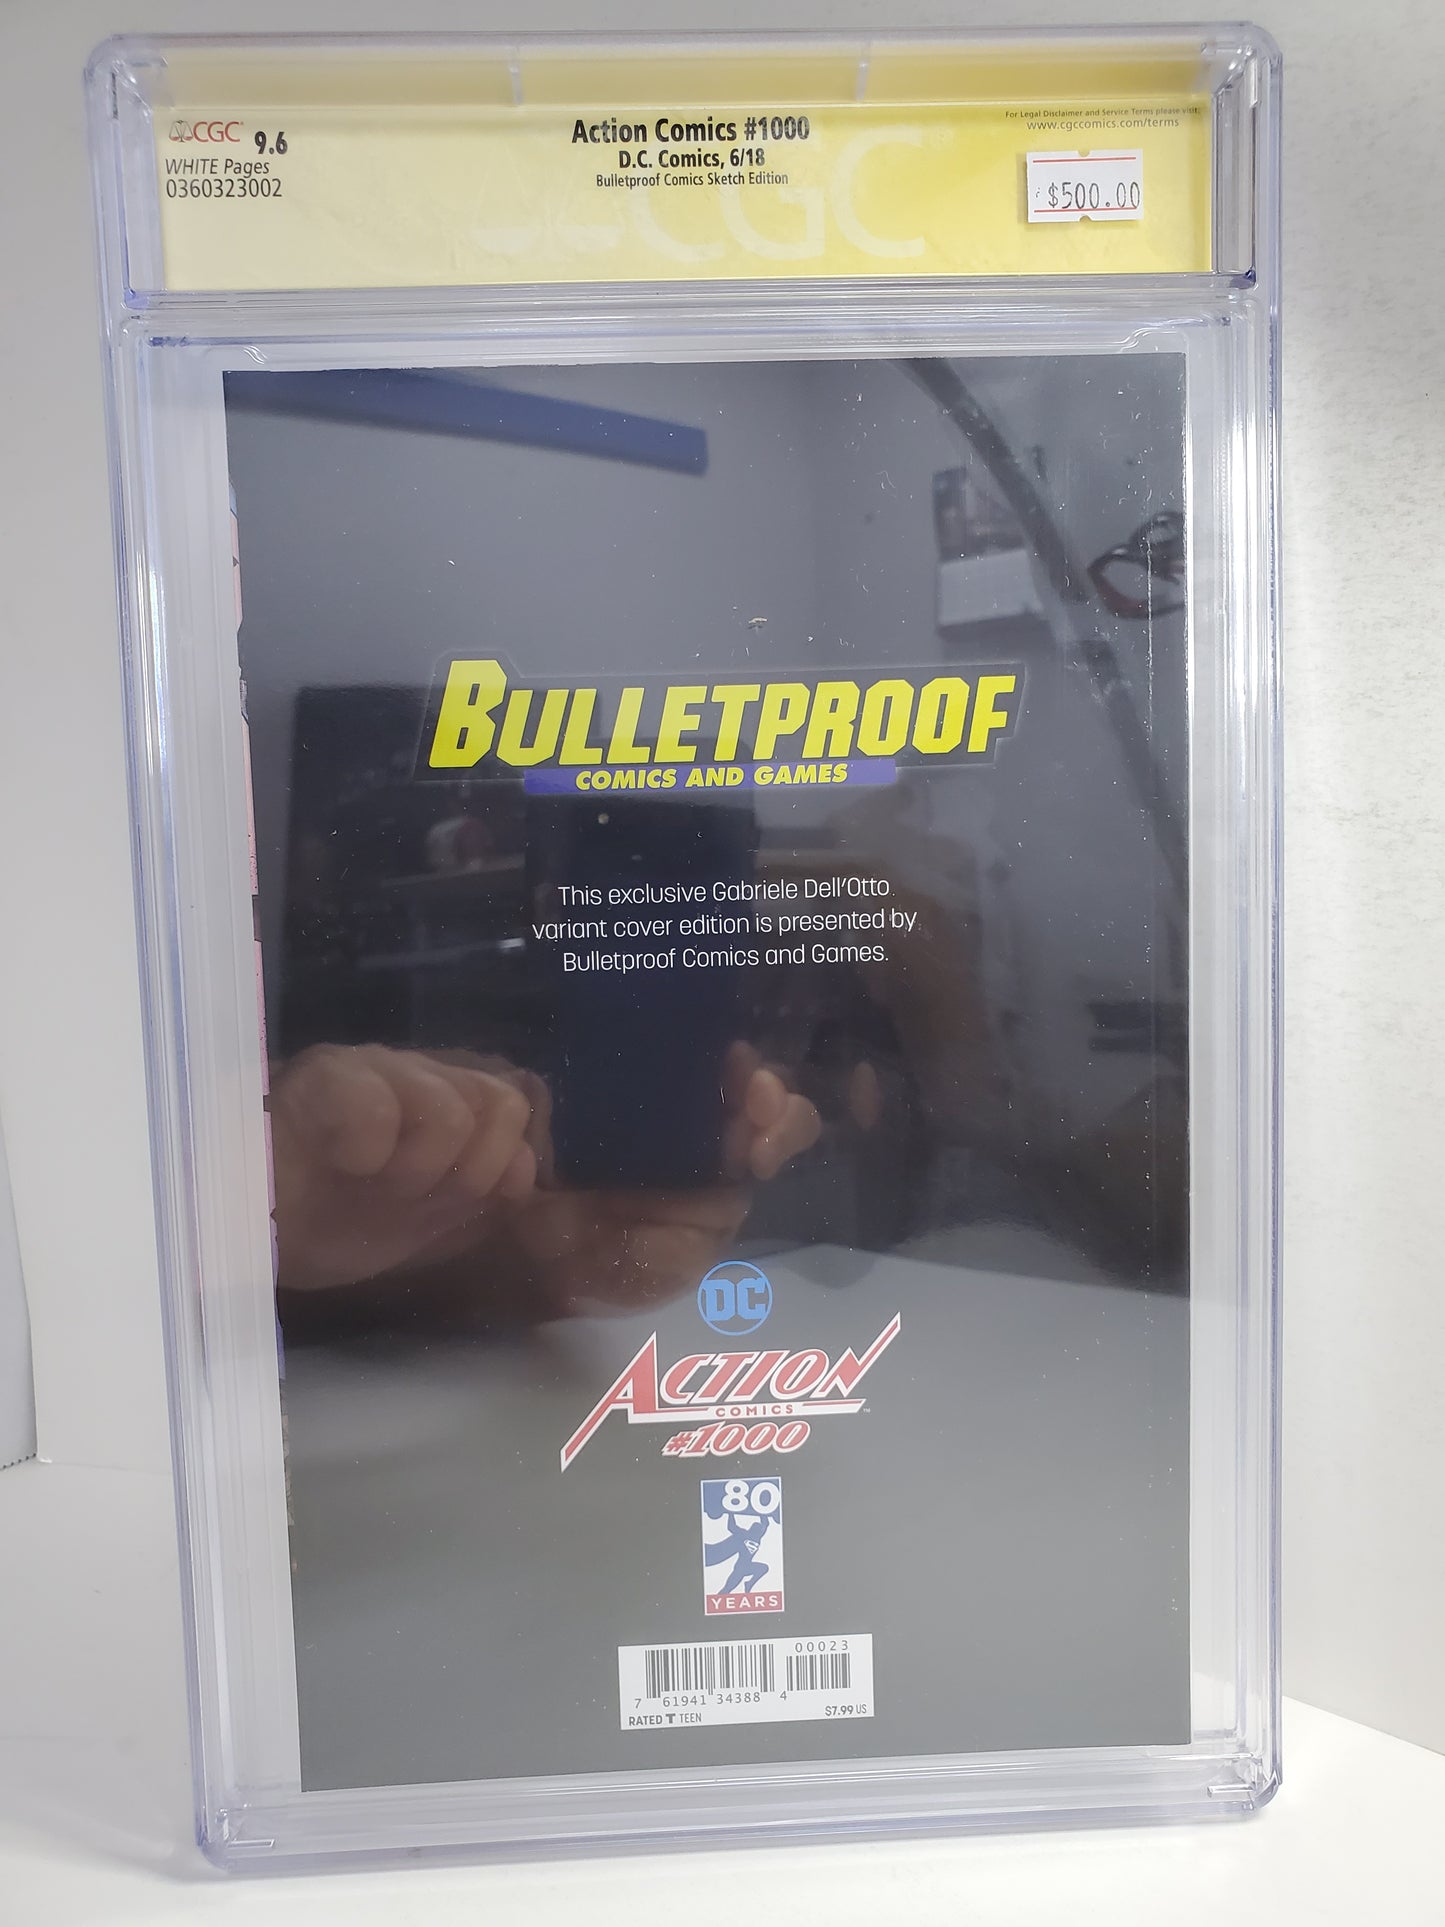 DC Action Comics #1000 Bulletproof Sketch Edition Virgin CGC 9.6 SIGNED SLAB